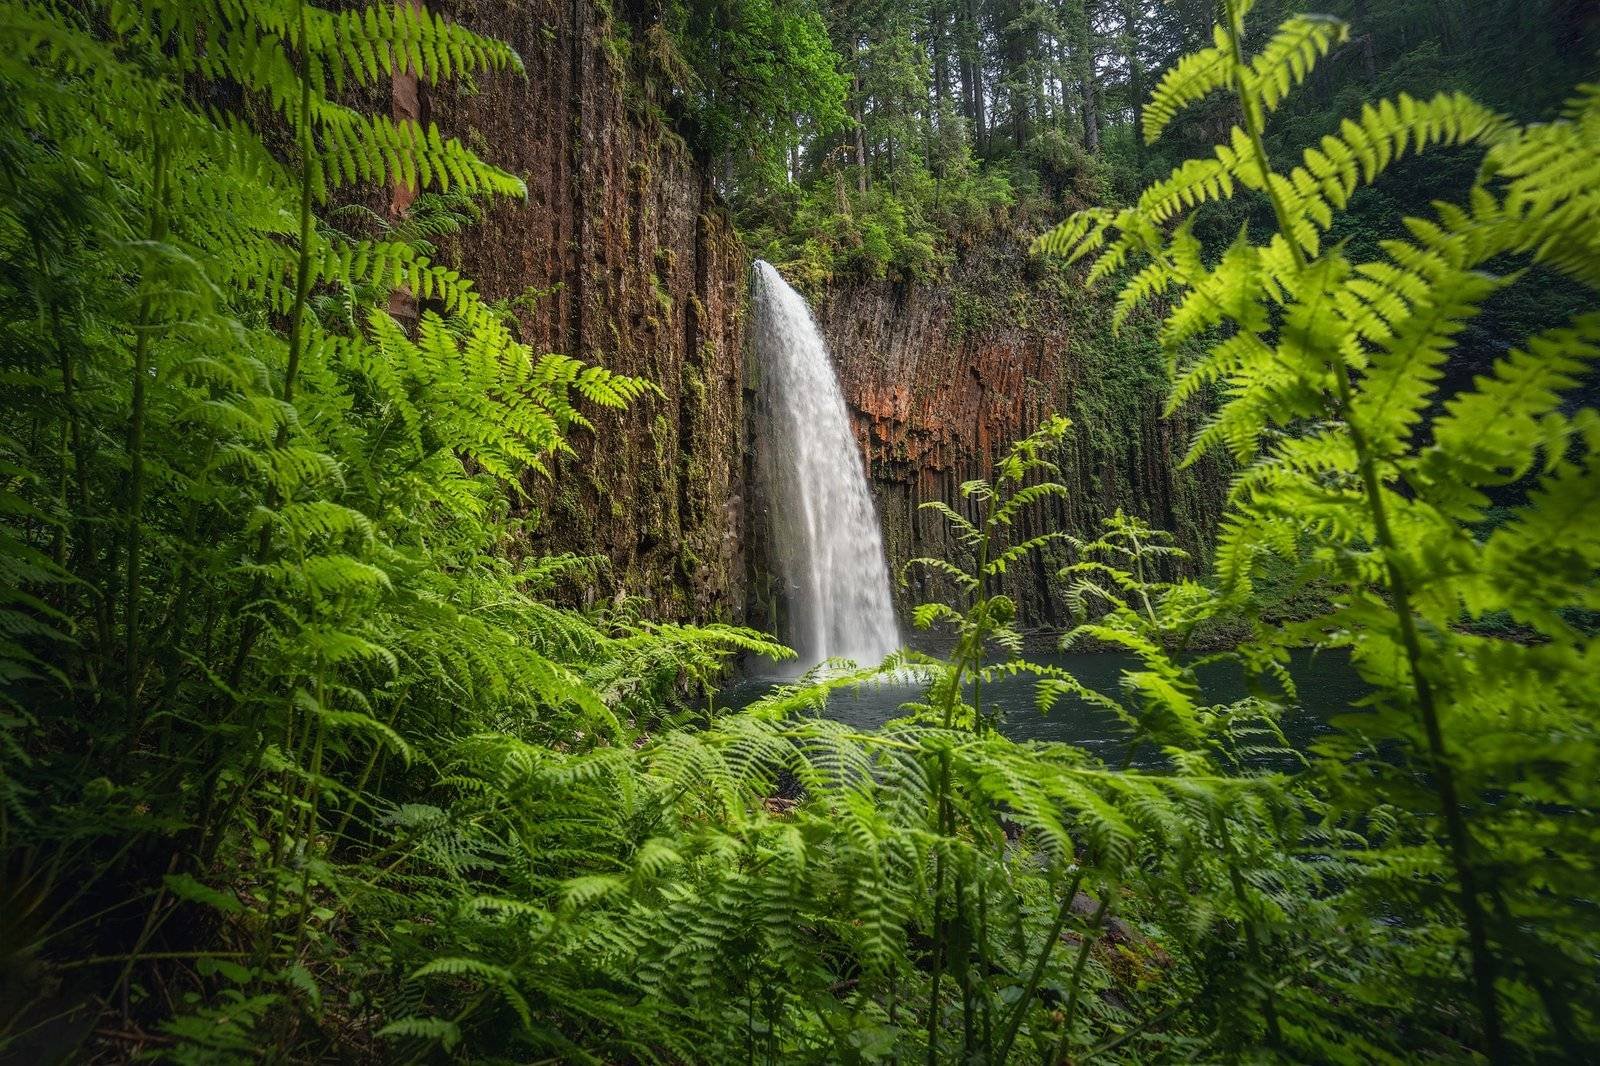 Oregon Waterfall Landscape Photography, Abiqua Falls